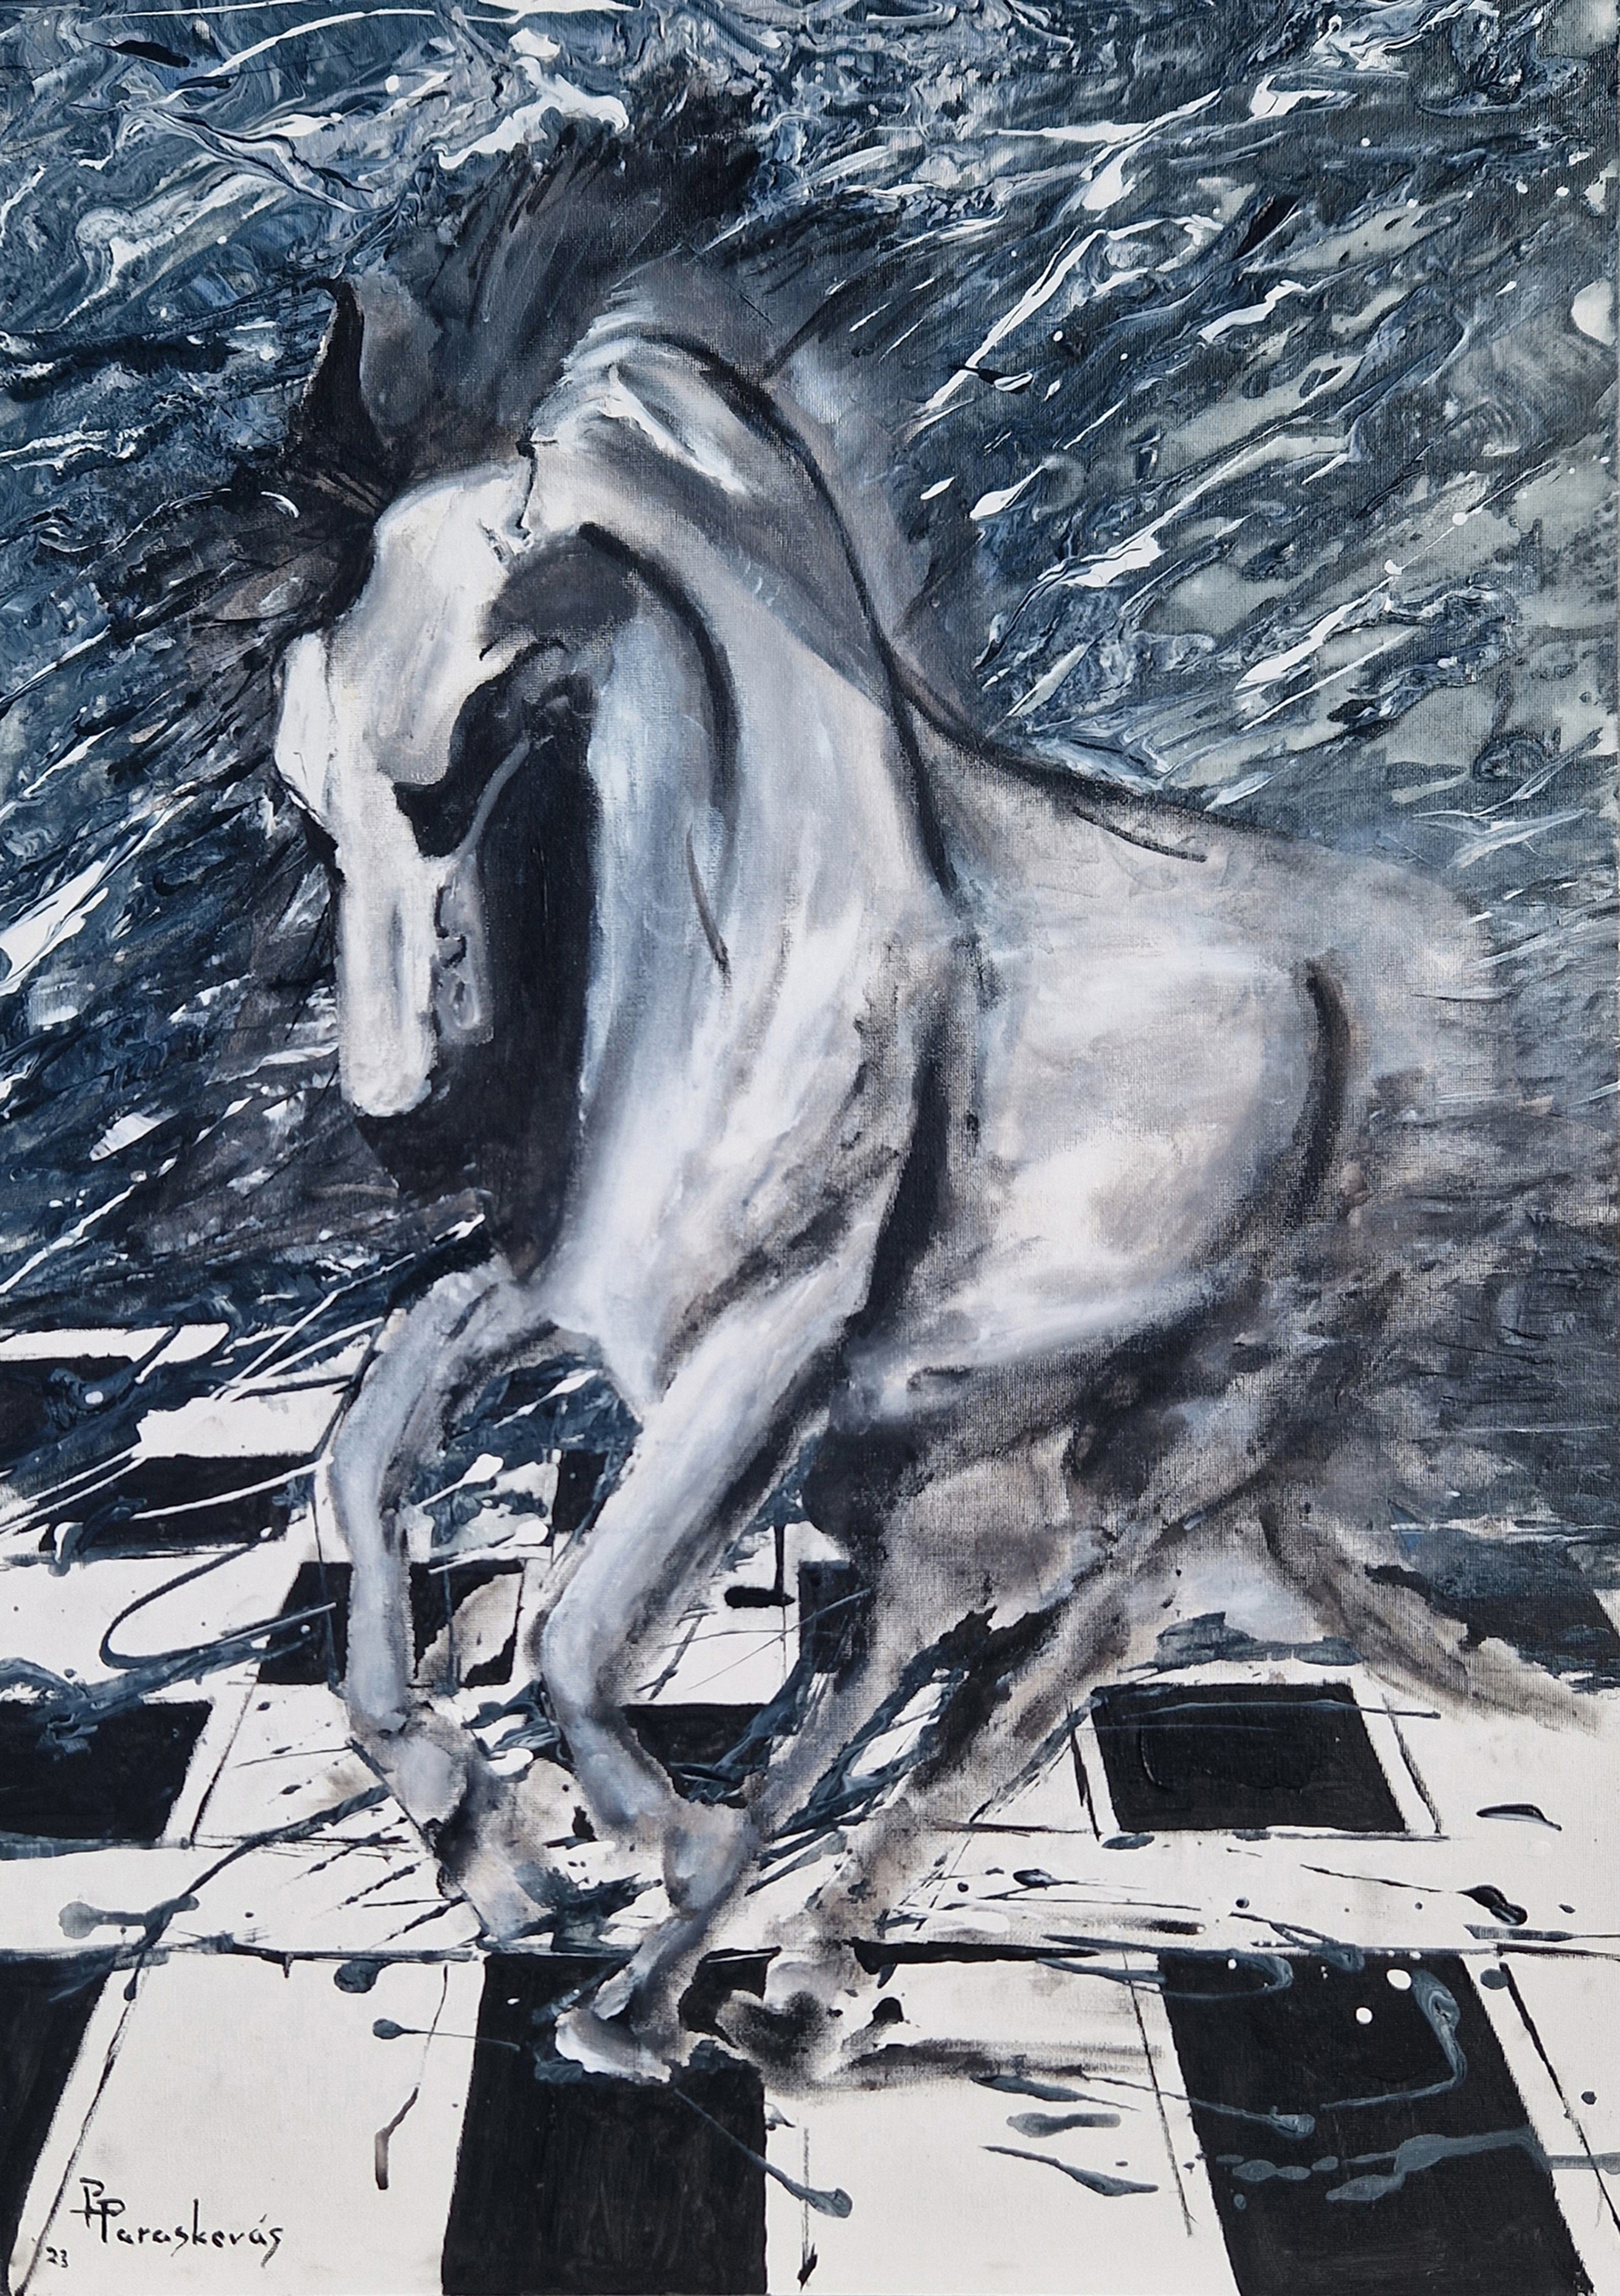 #PP.01 Title: "Horse running"